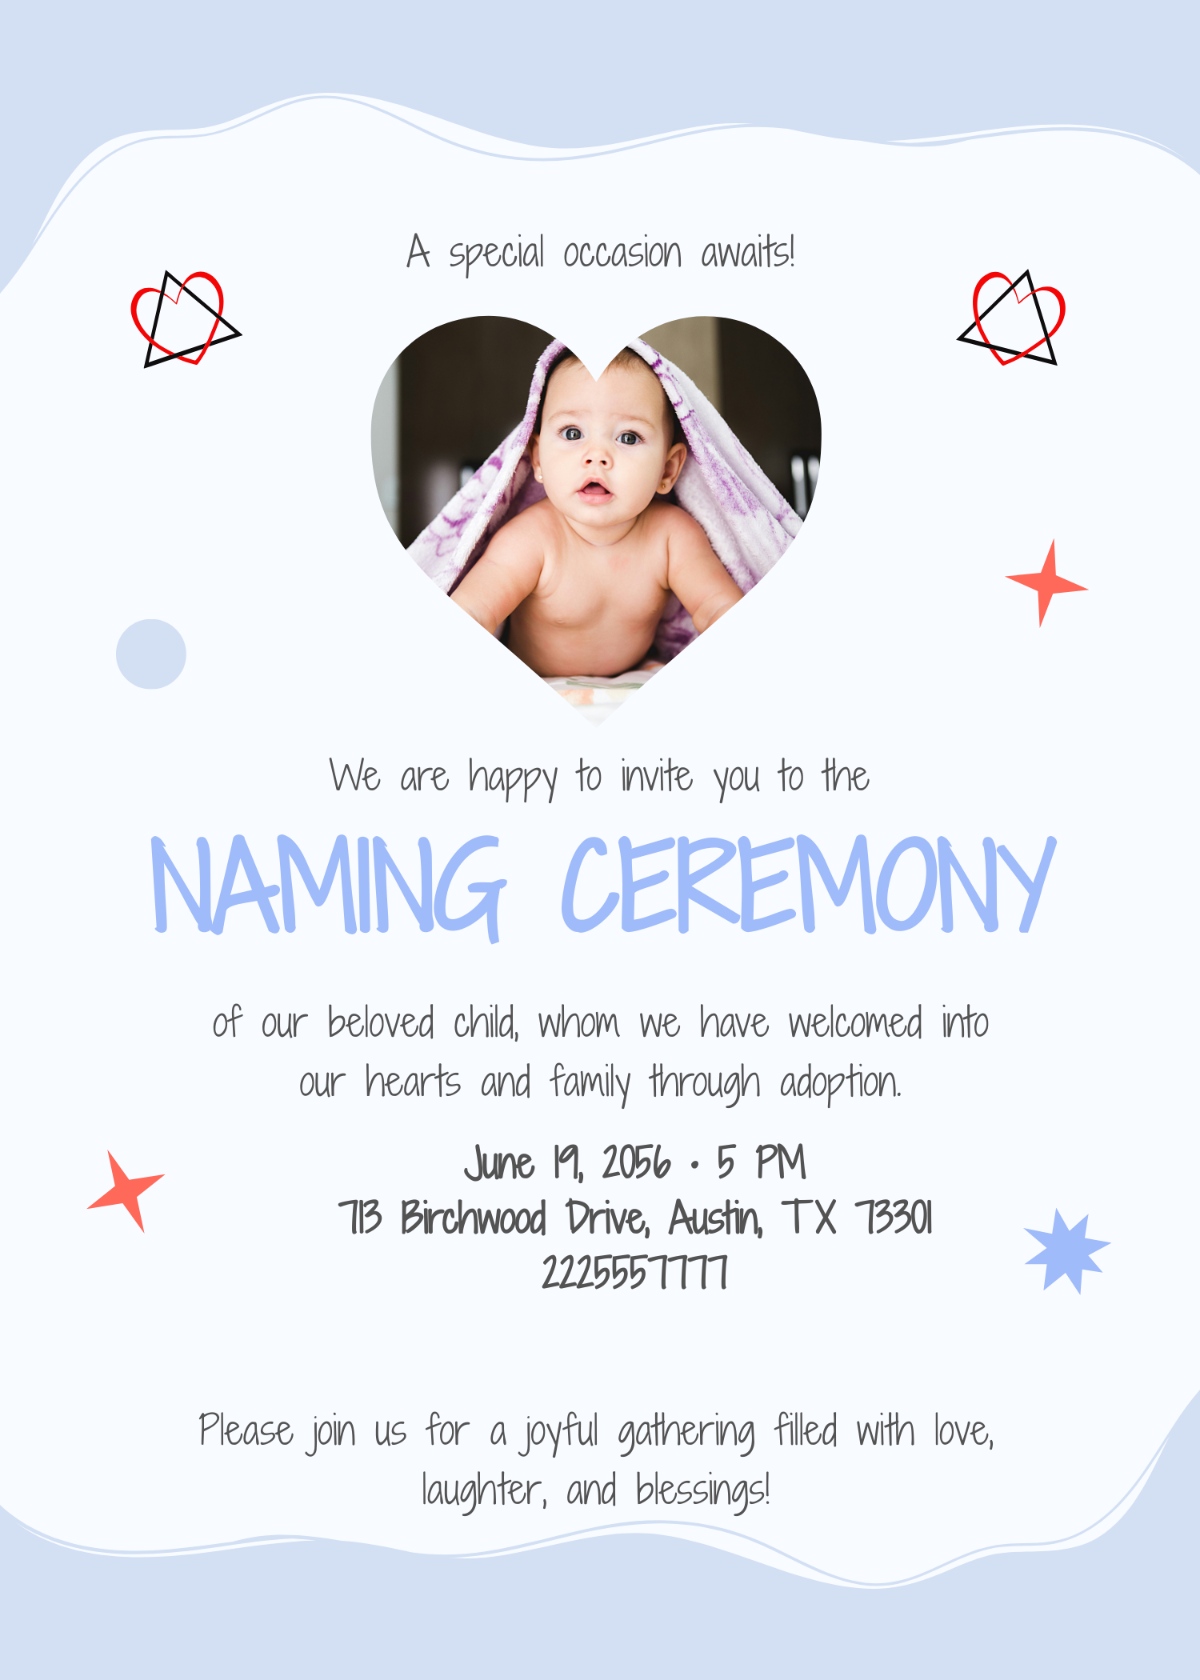 Naming Ceremony Invitation For Adoption